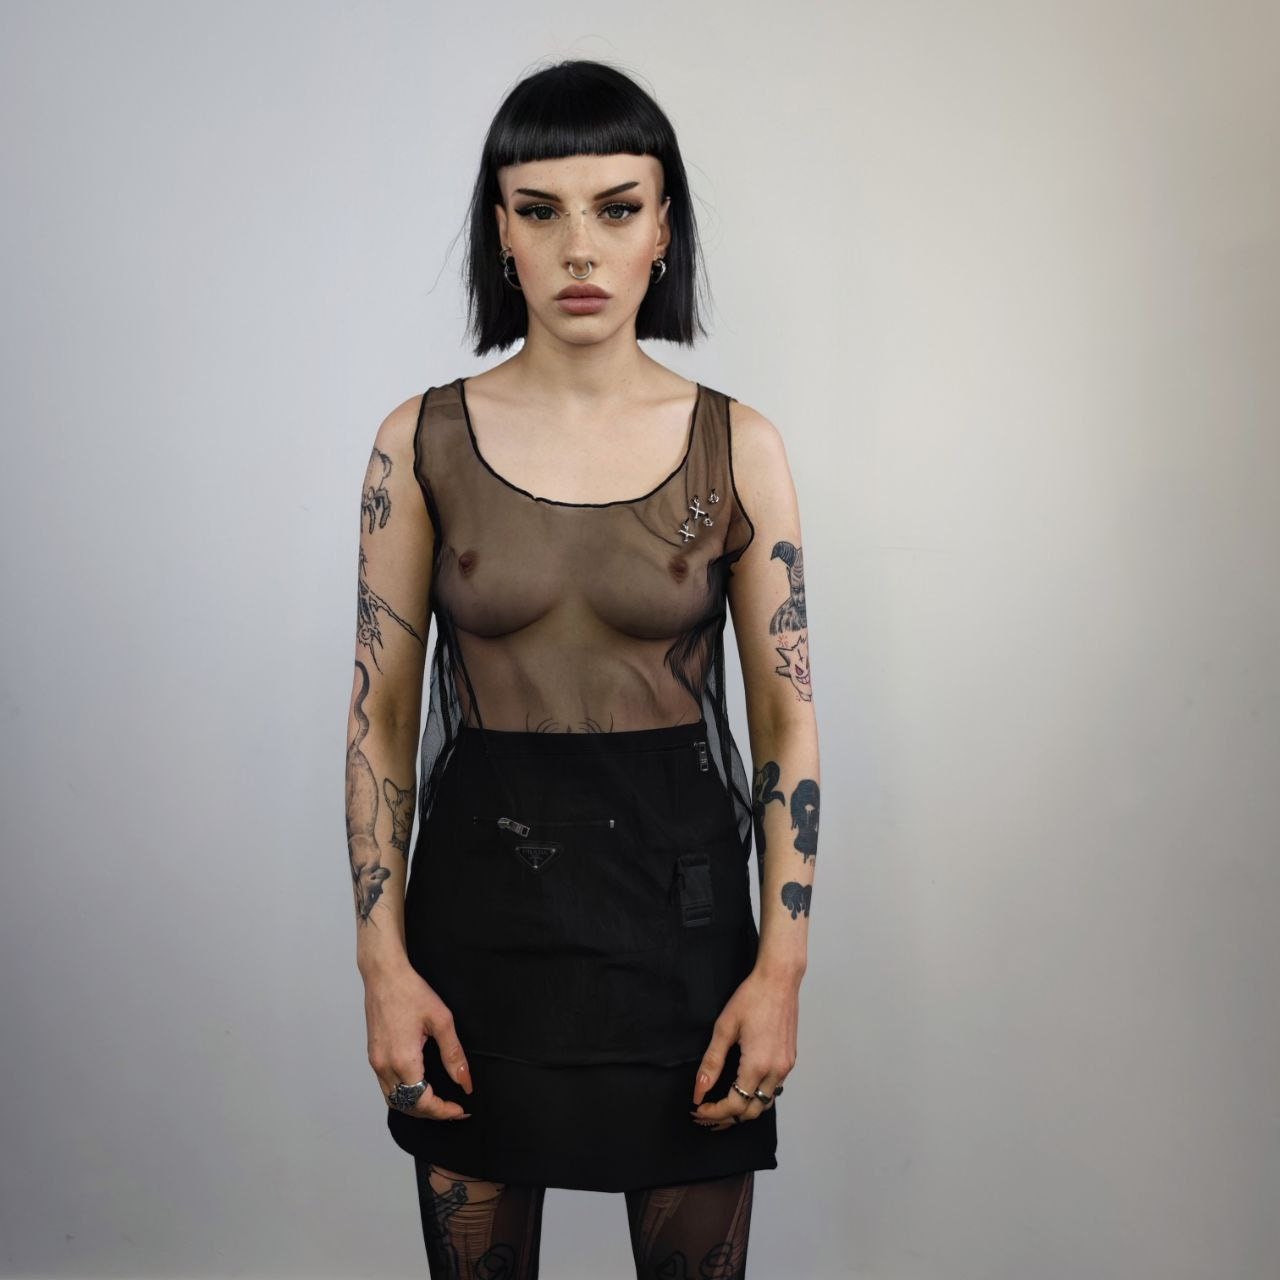 Discover Sheer sleeveless t-shirt transparent tee see-through rocker top grunge mesh punk vest surfer tank top in black